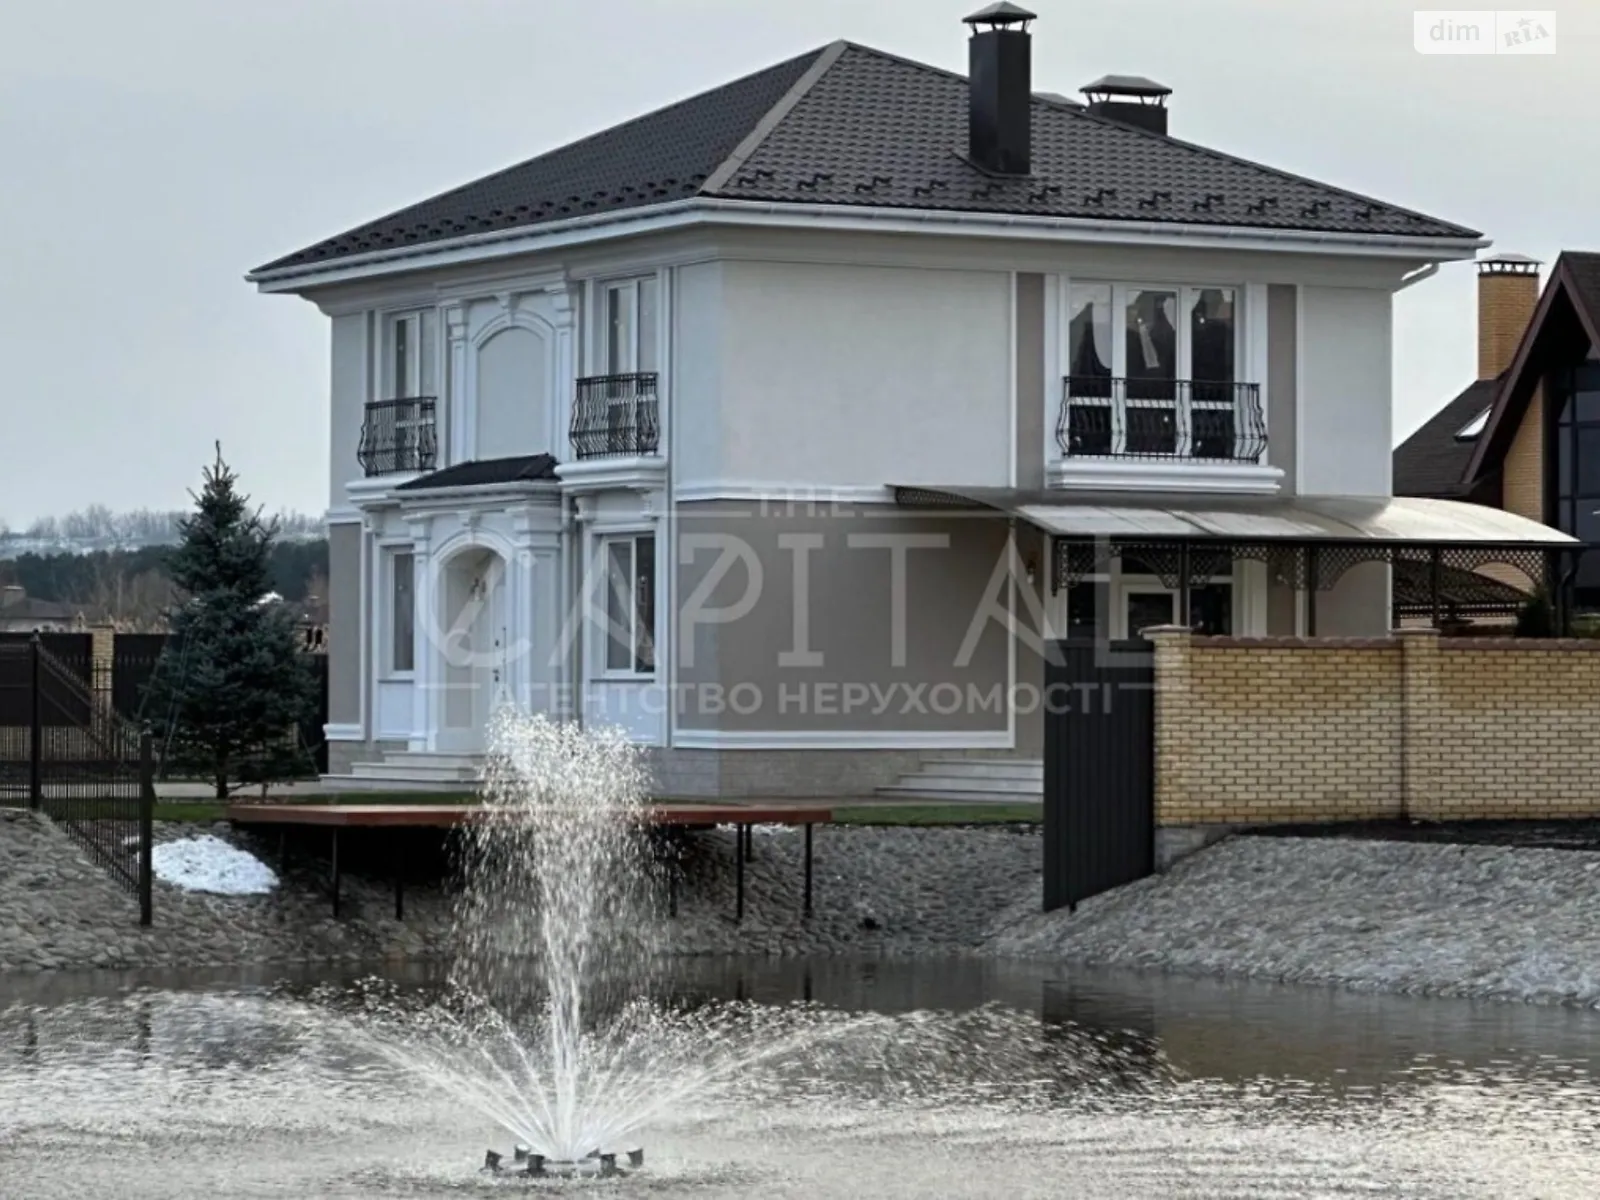 Продается дом на 2 этажа 165 кв. м с камином, Романків - фото 1